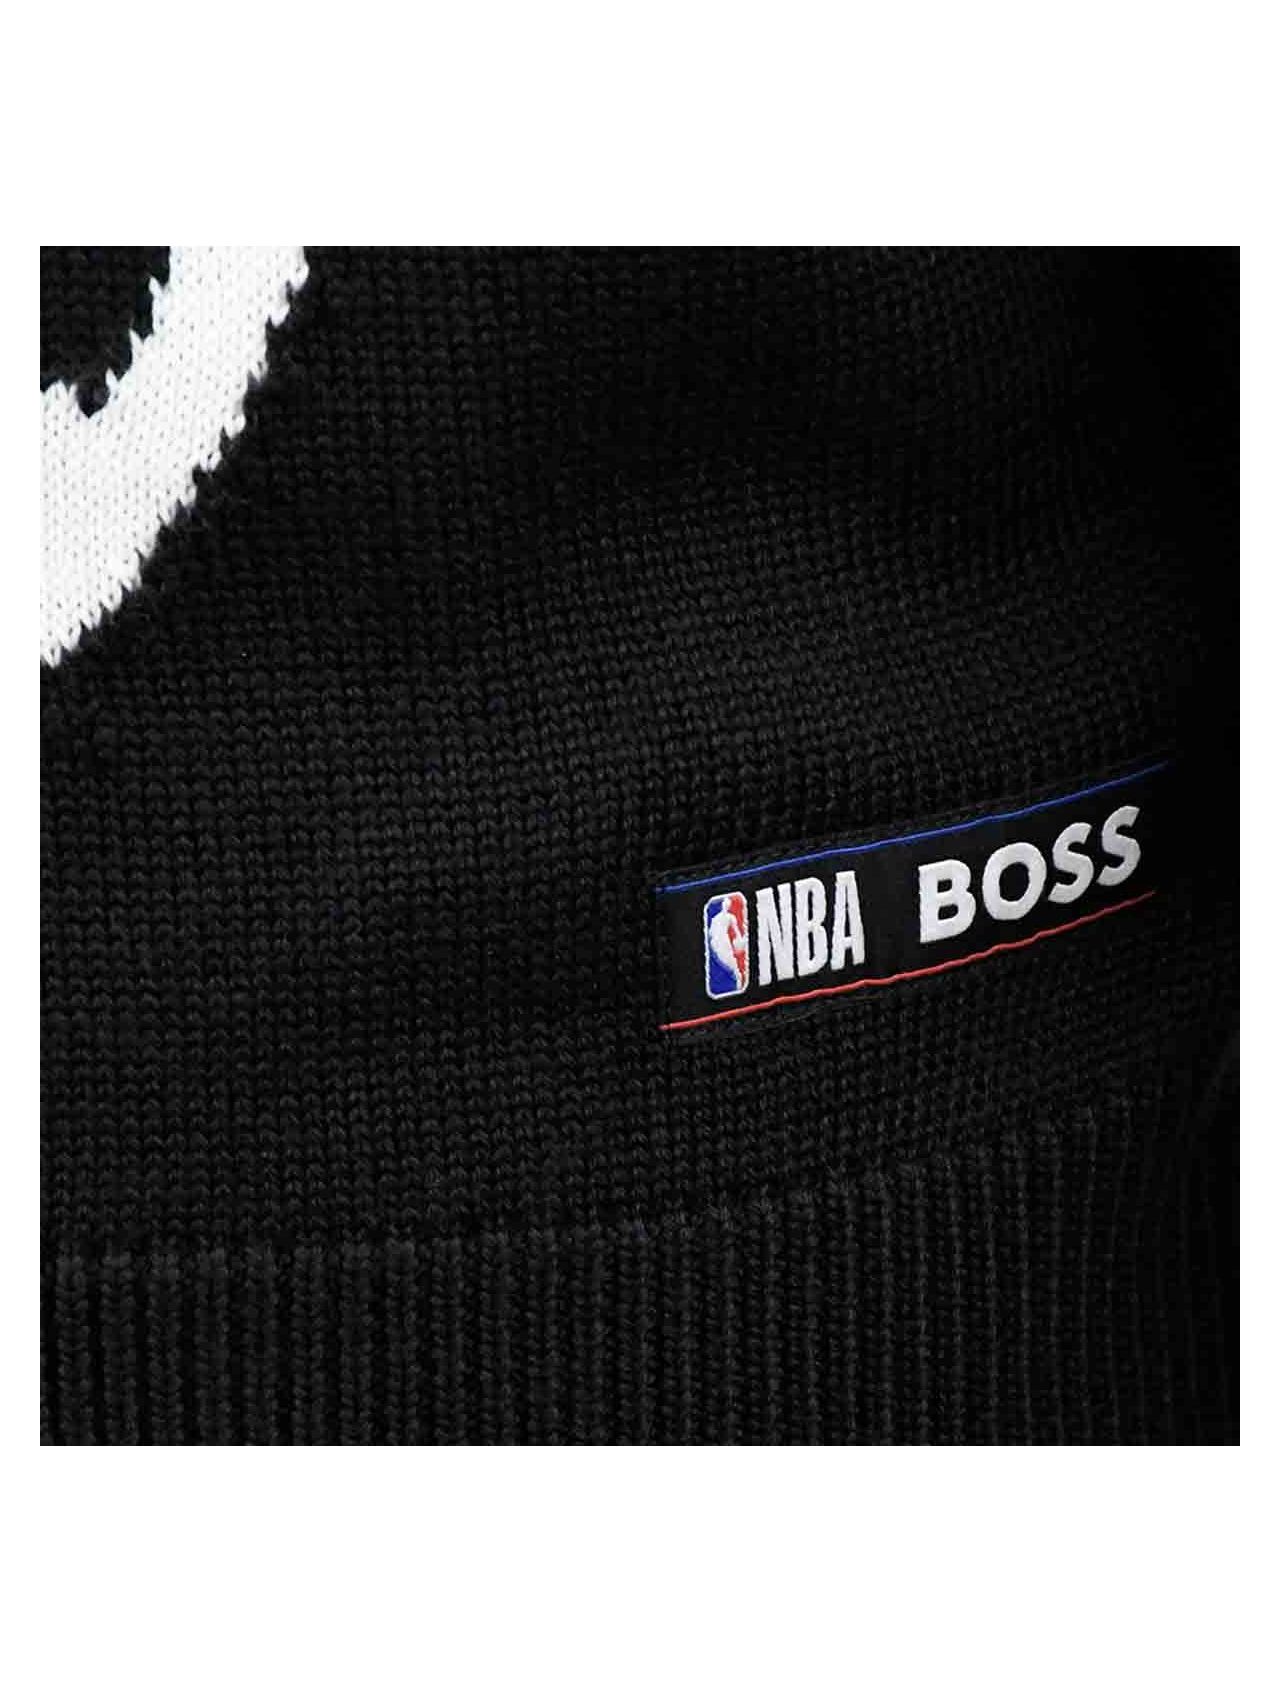 Boss x NBA Chicago Bulls Black Acrylic Virgin Wool Sweater | IsuiT